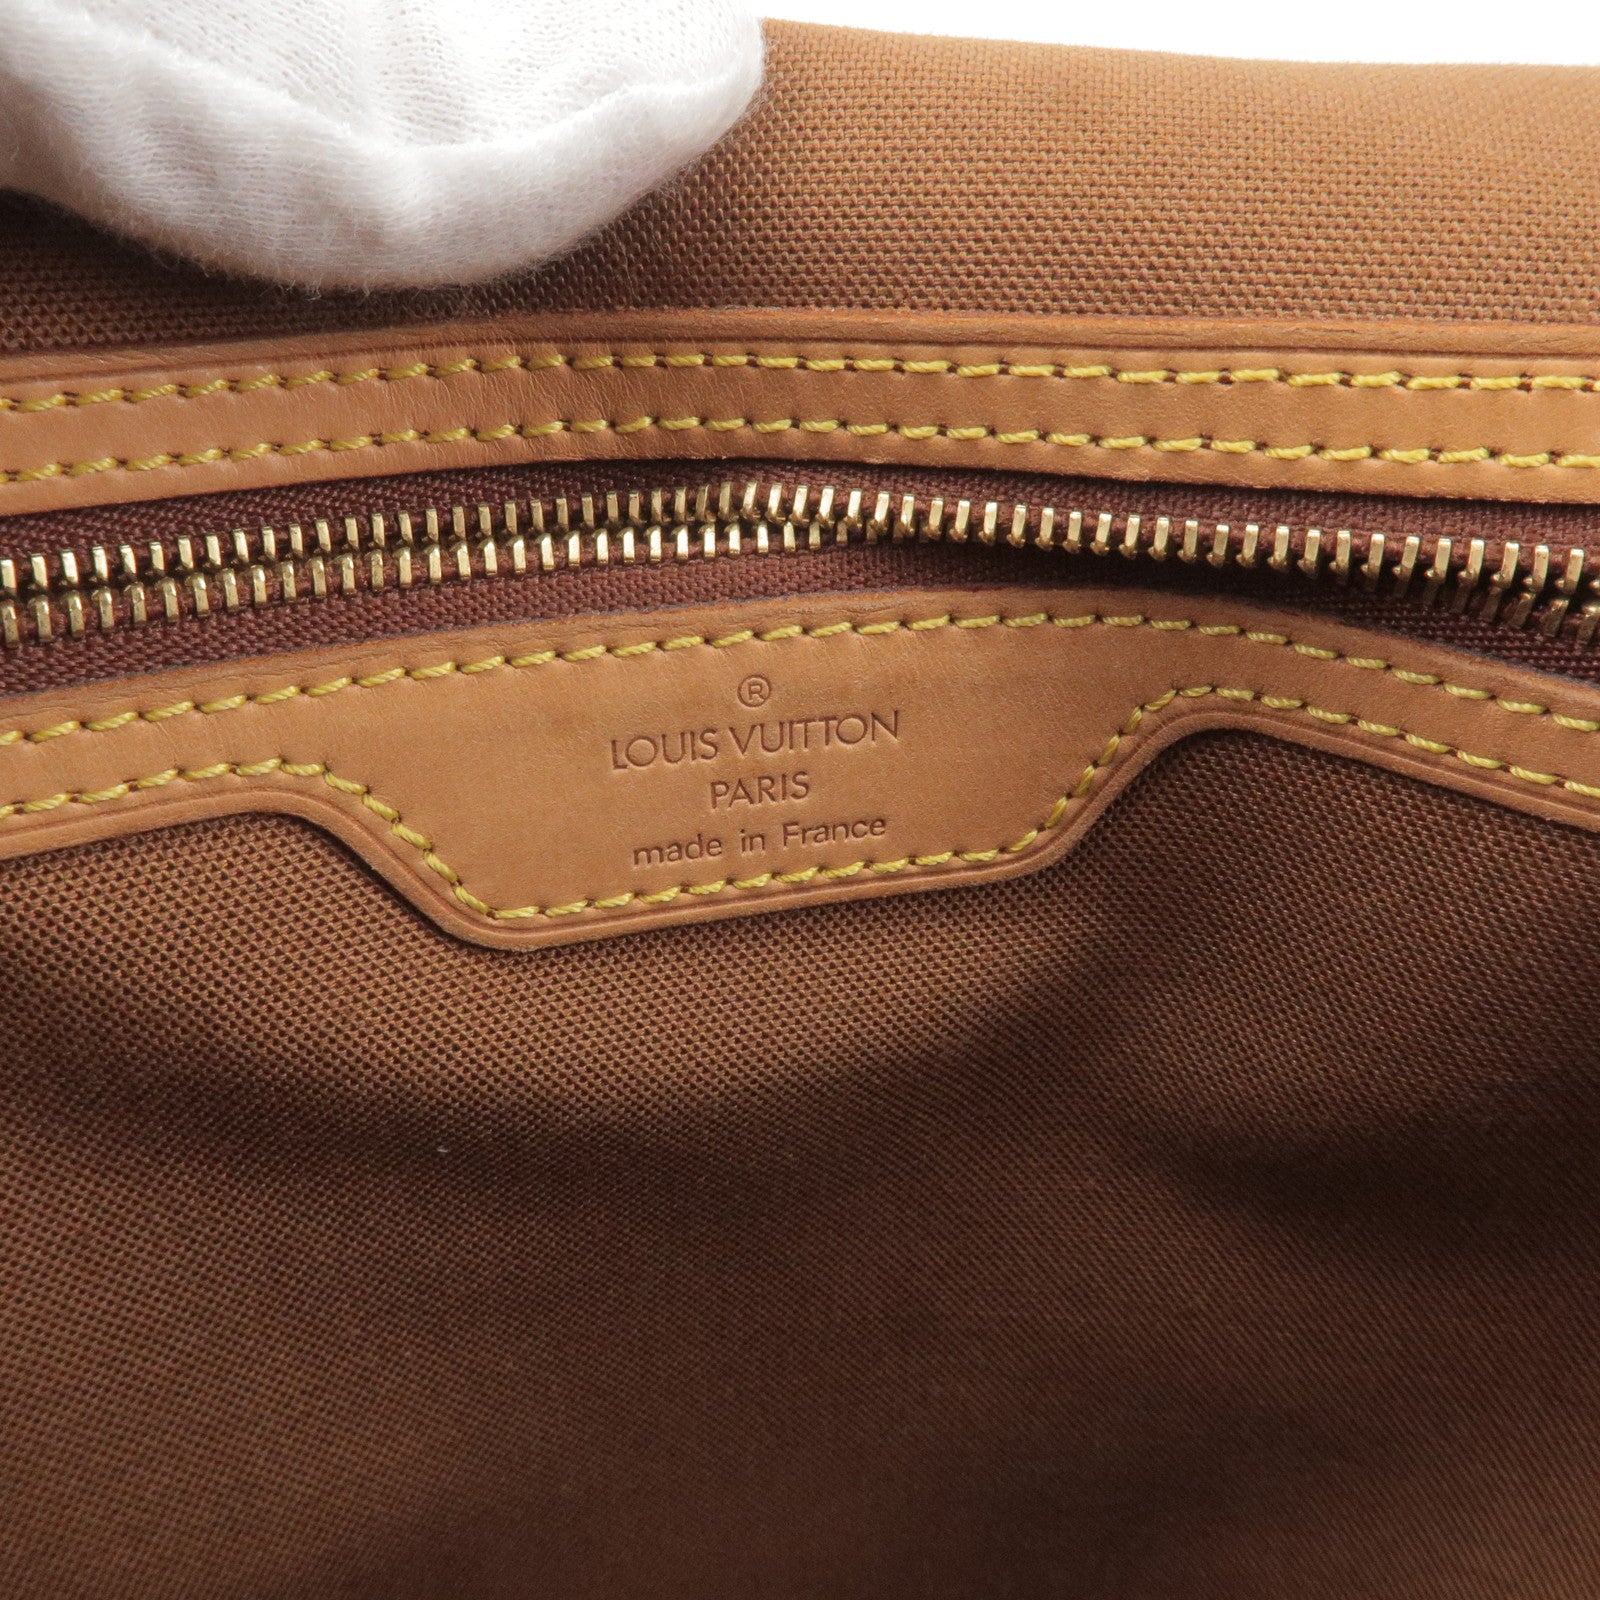 Authenticated Used Louis Vuitton Monogram Abes M45257 Bag Shoulder